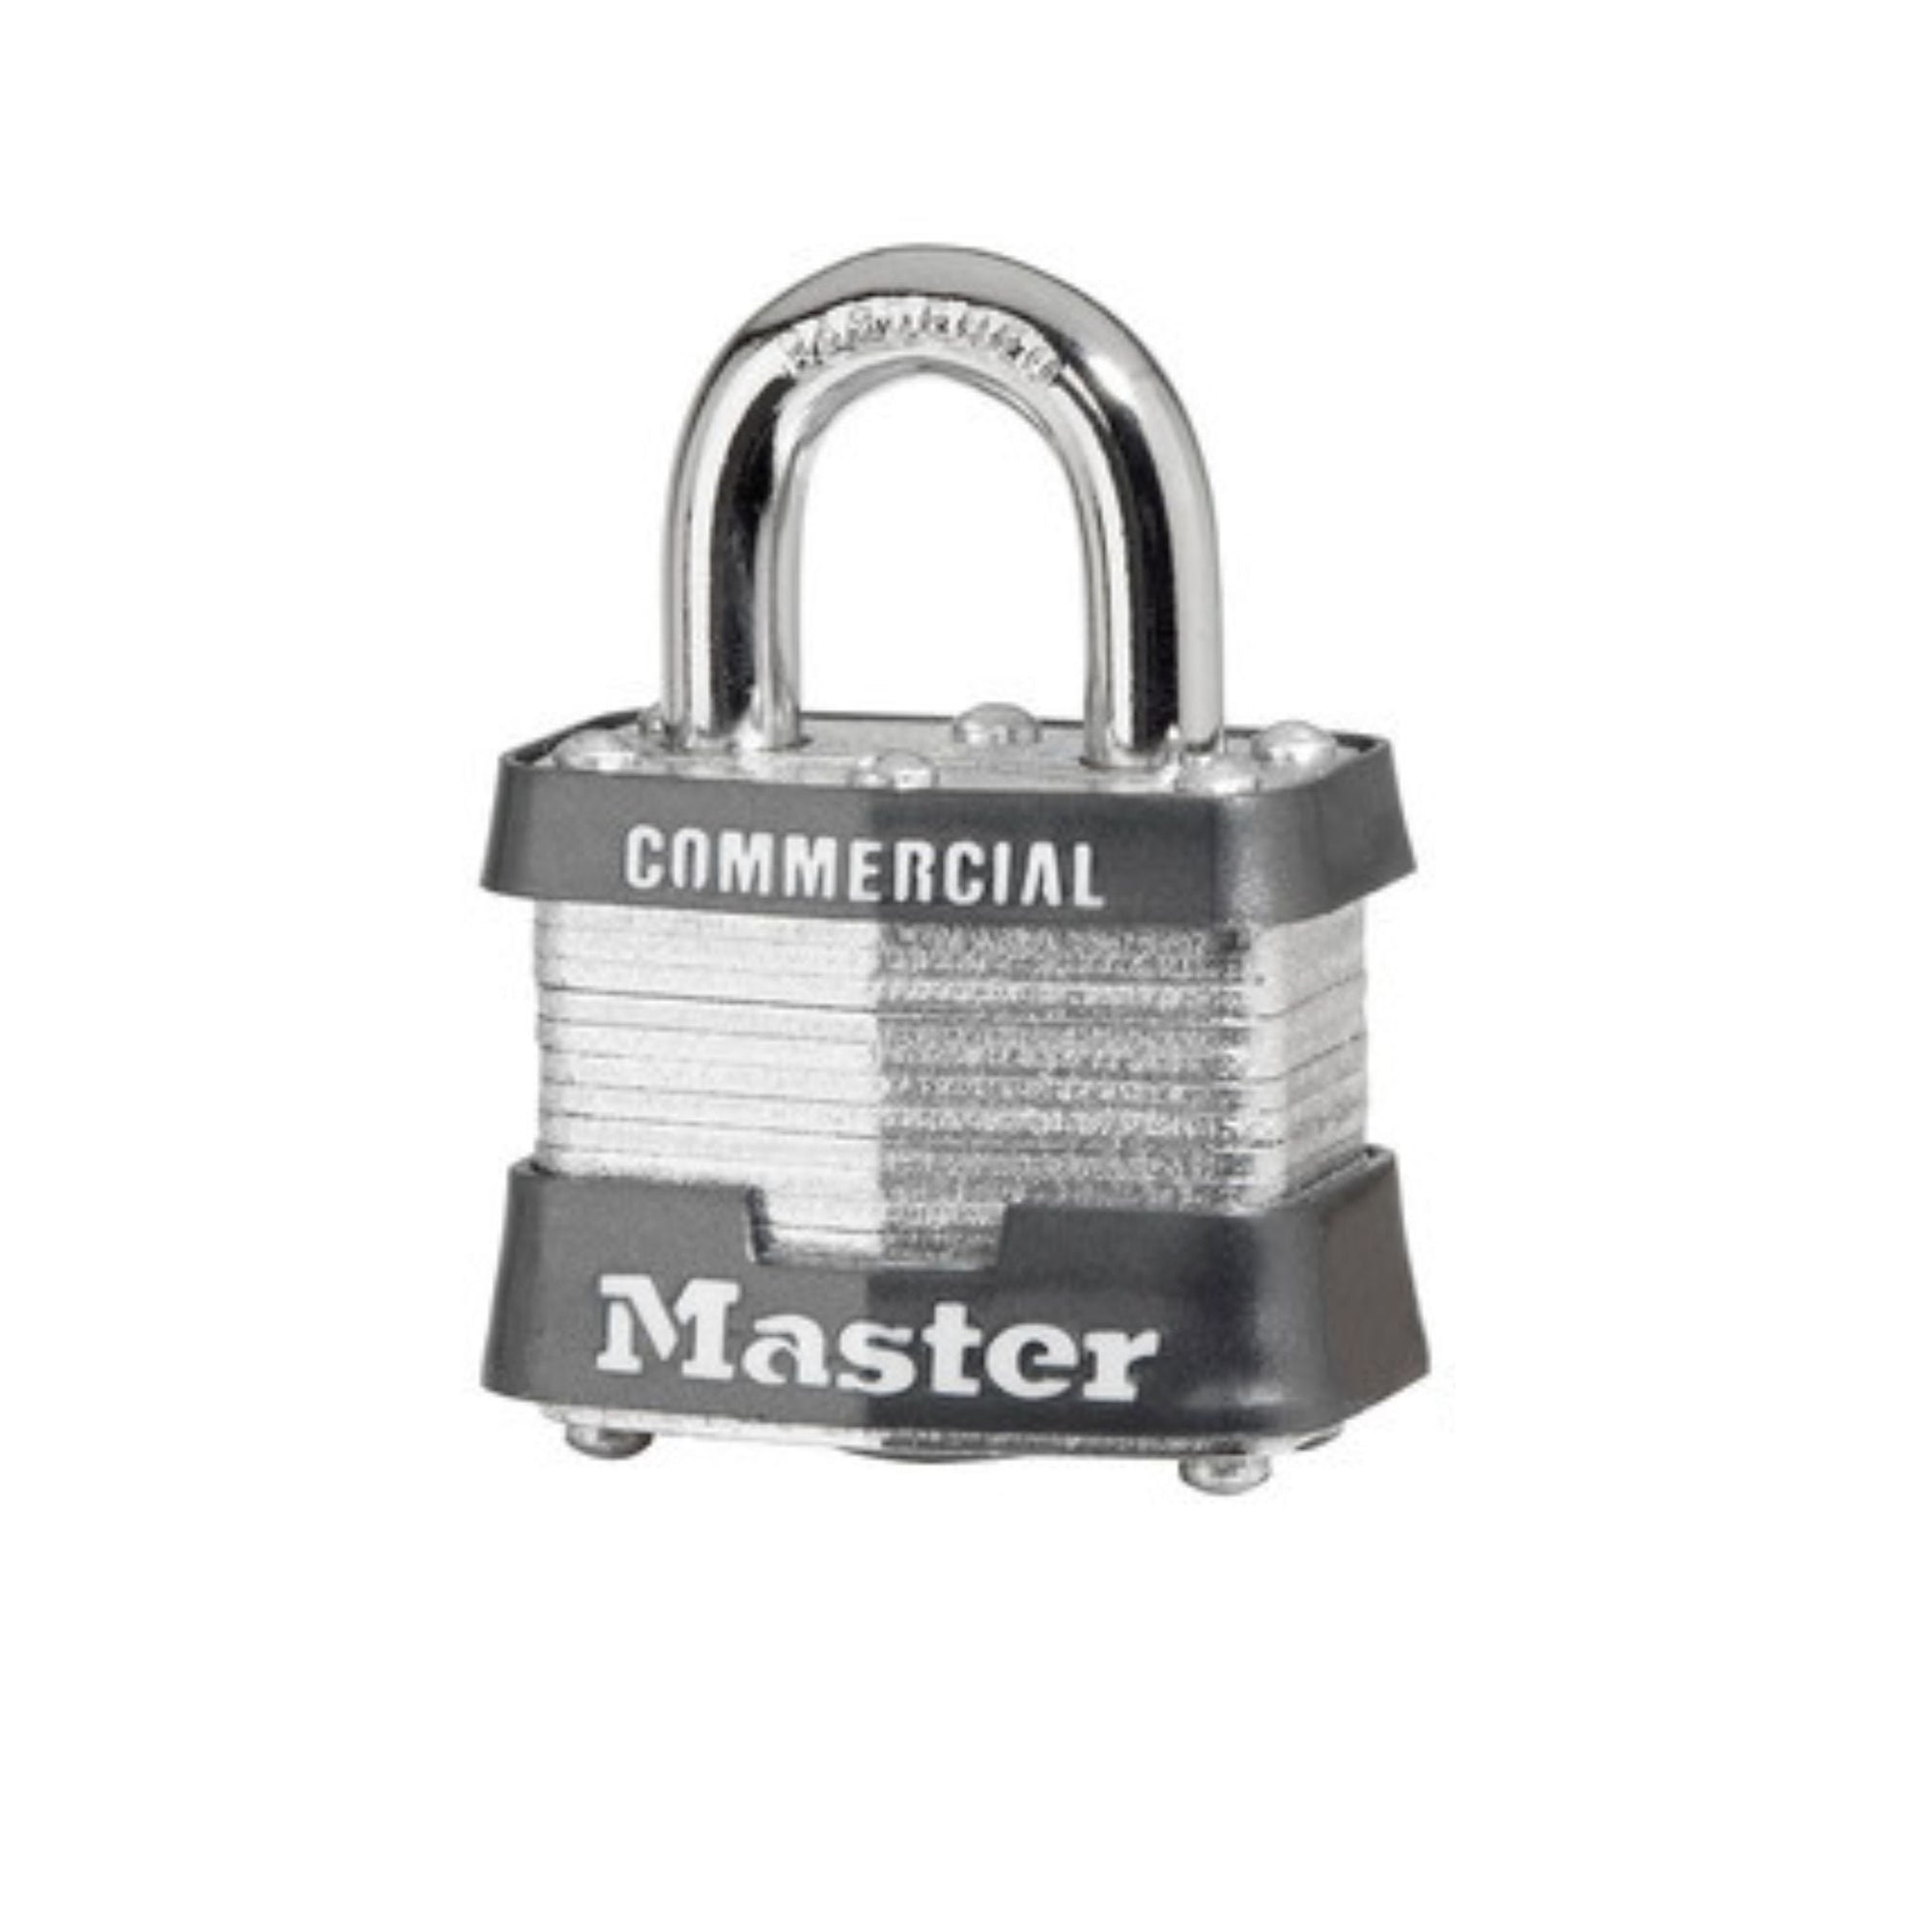 Master Lock 3KA 0311 Lock Laminated steel No. 3 Series Padlock Keyed to Match Existing Key Number KA0311 - The Lock Source